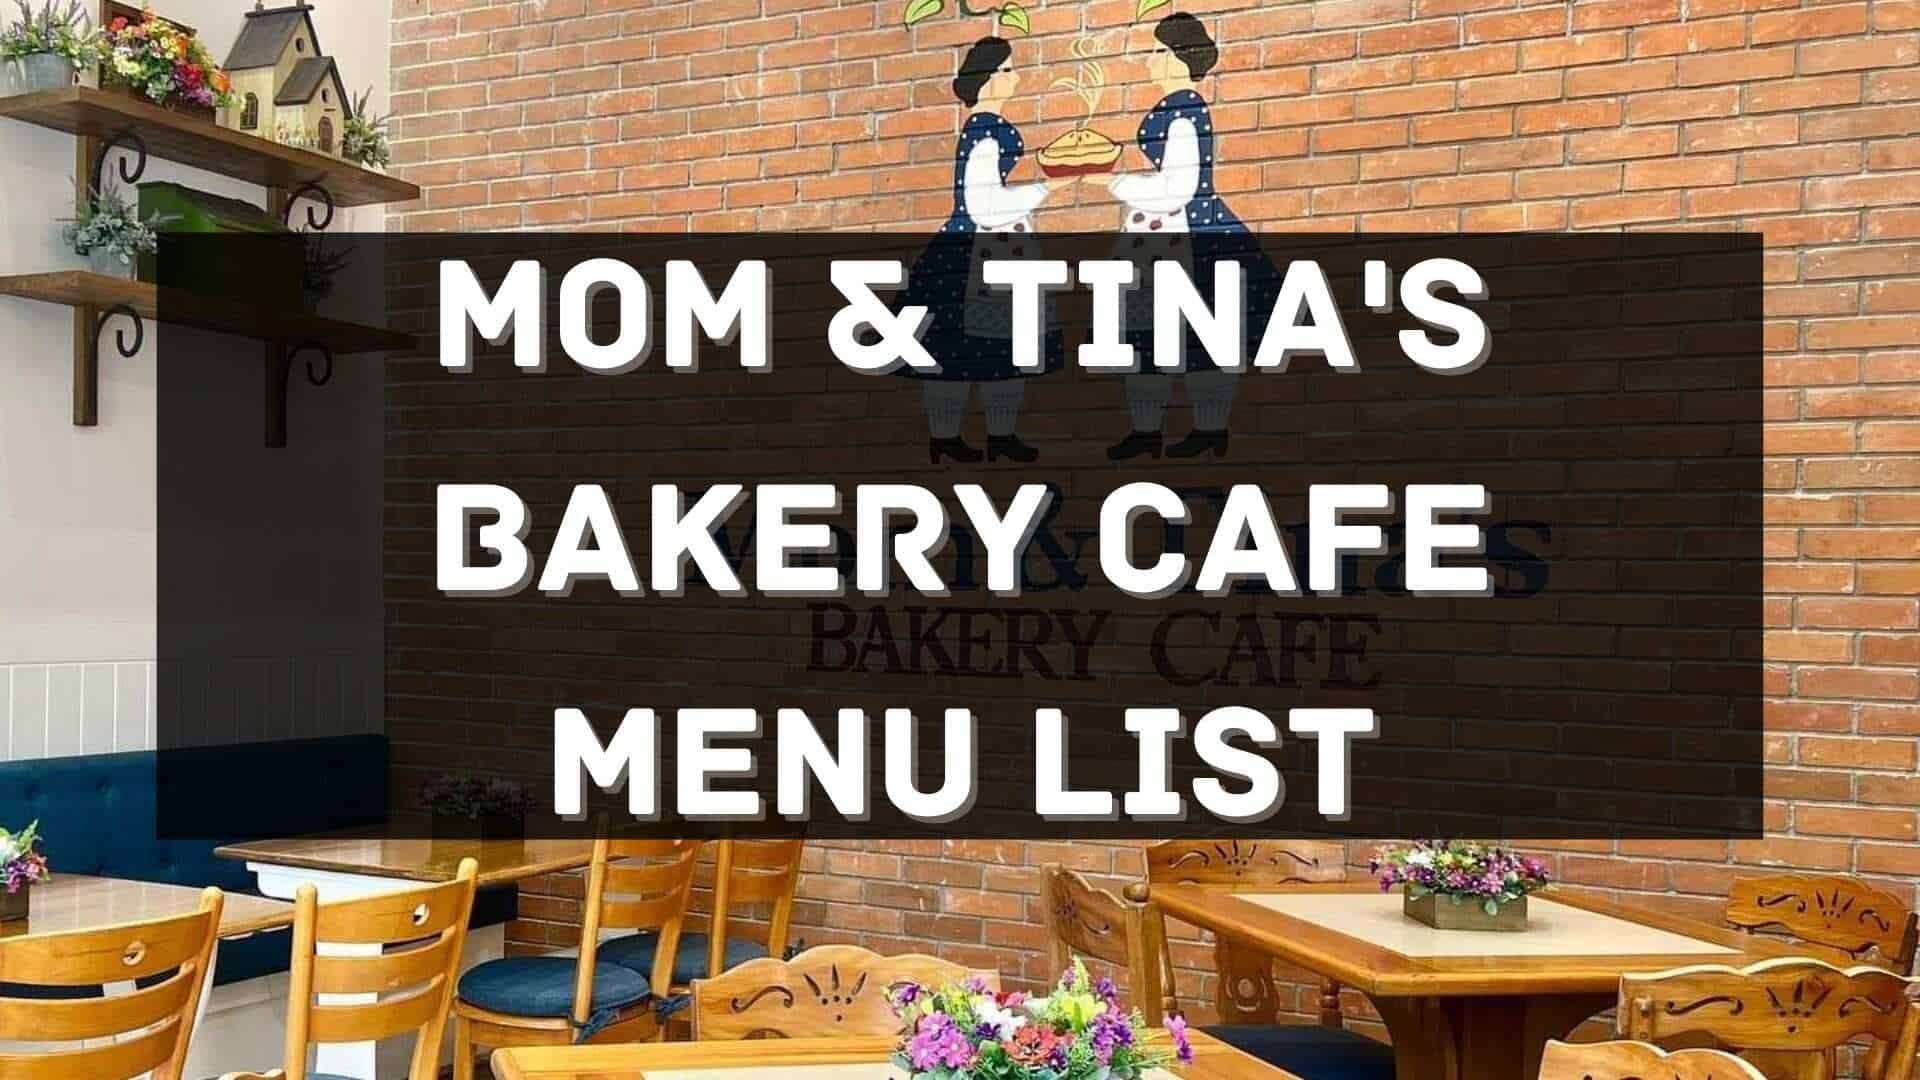 mom & tina's bakery cafe menu prices philippines